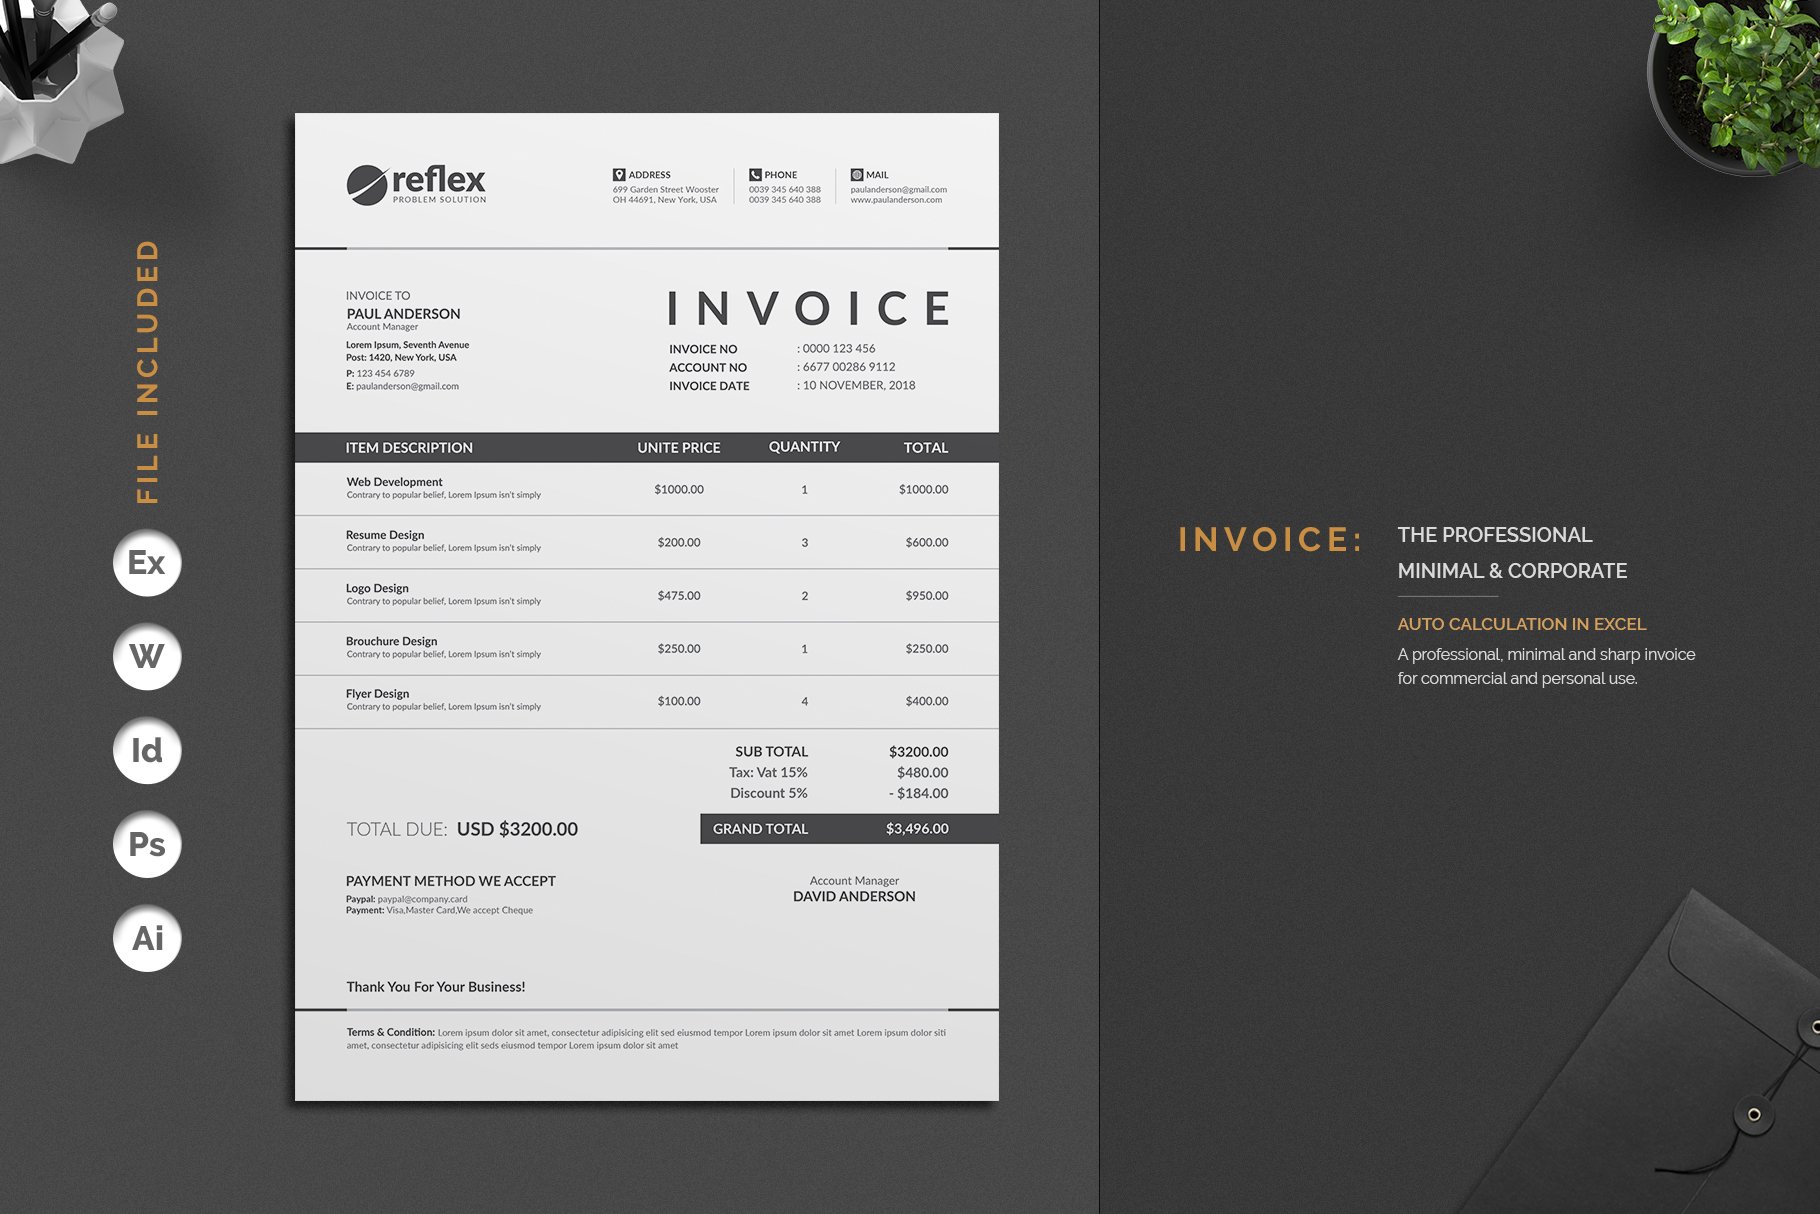 Invoice cover image.